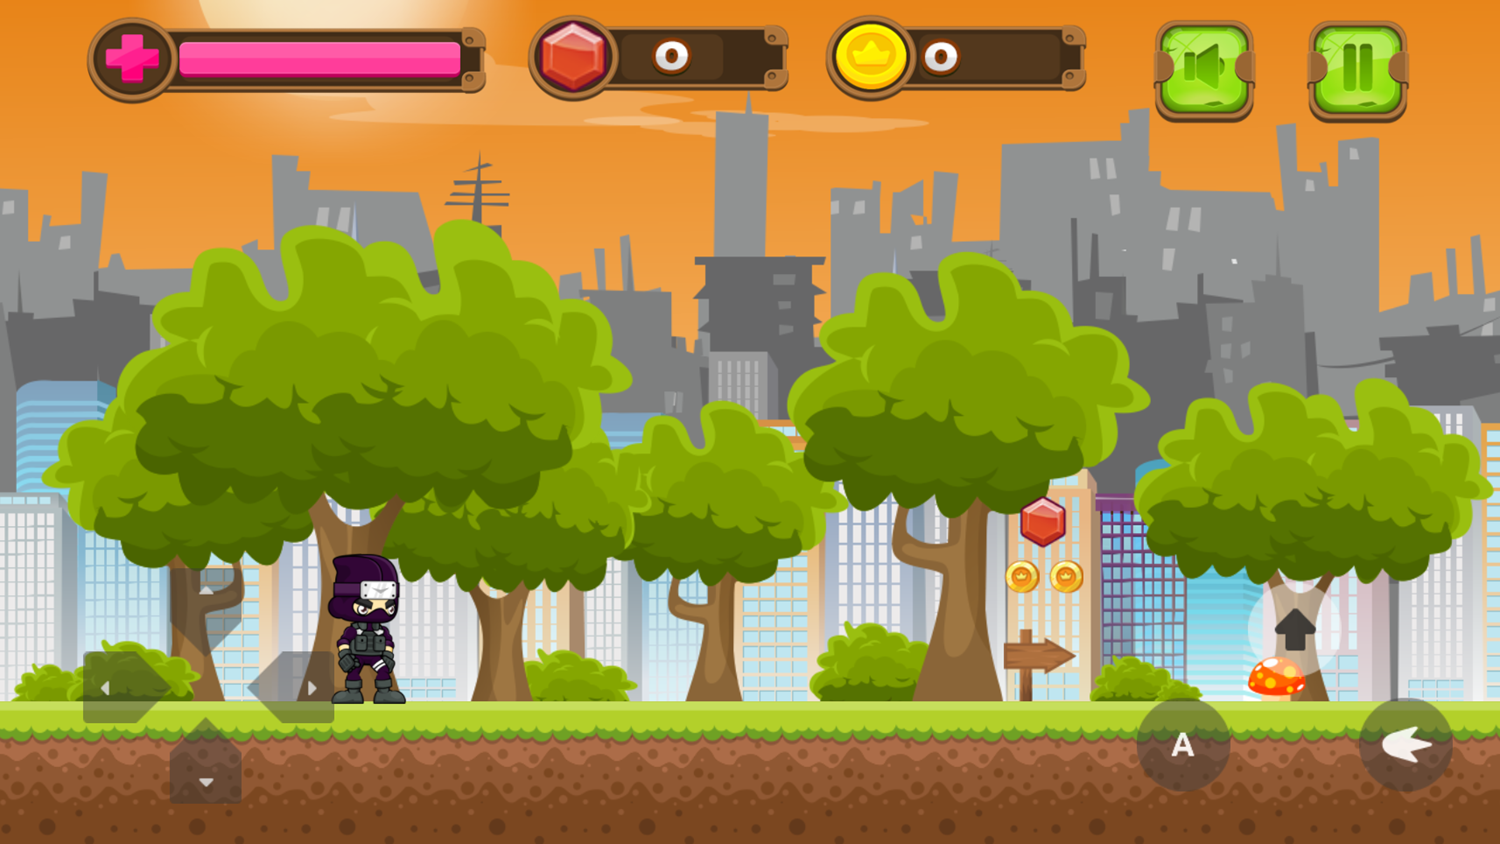 Ninja Boy Adventure Game Level Start Screenshot.